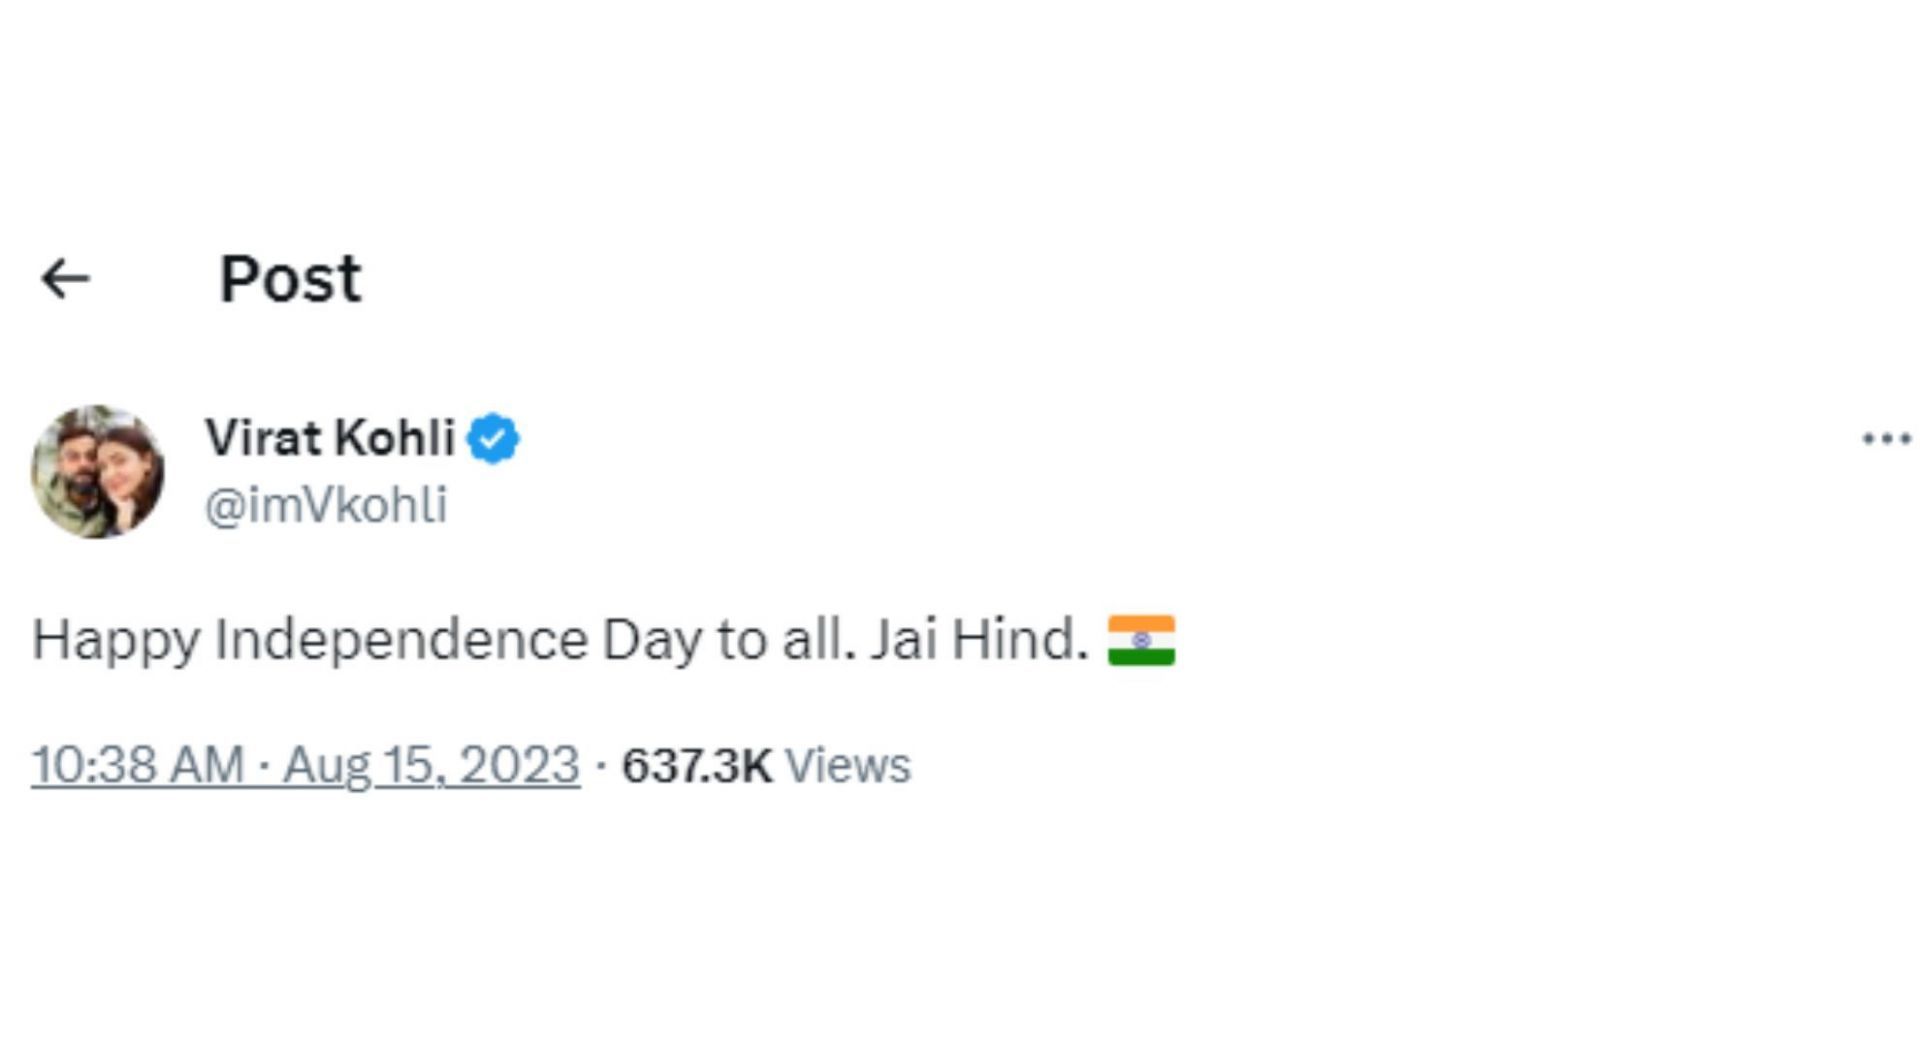 Virat Kohli dropped a simple message on Twitter.